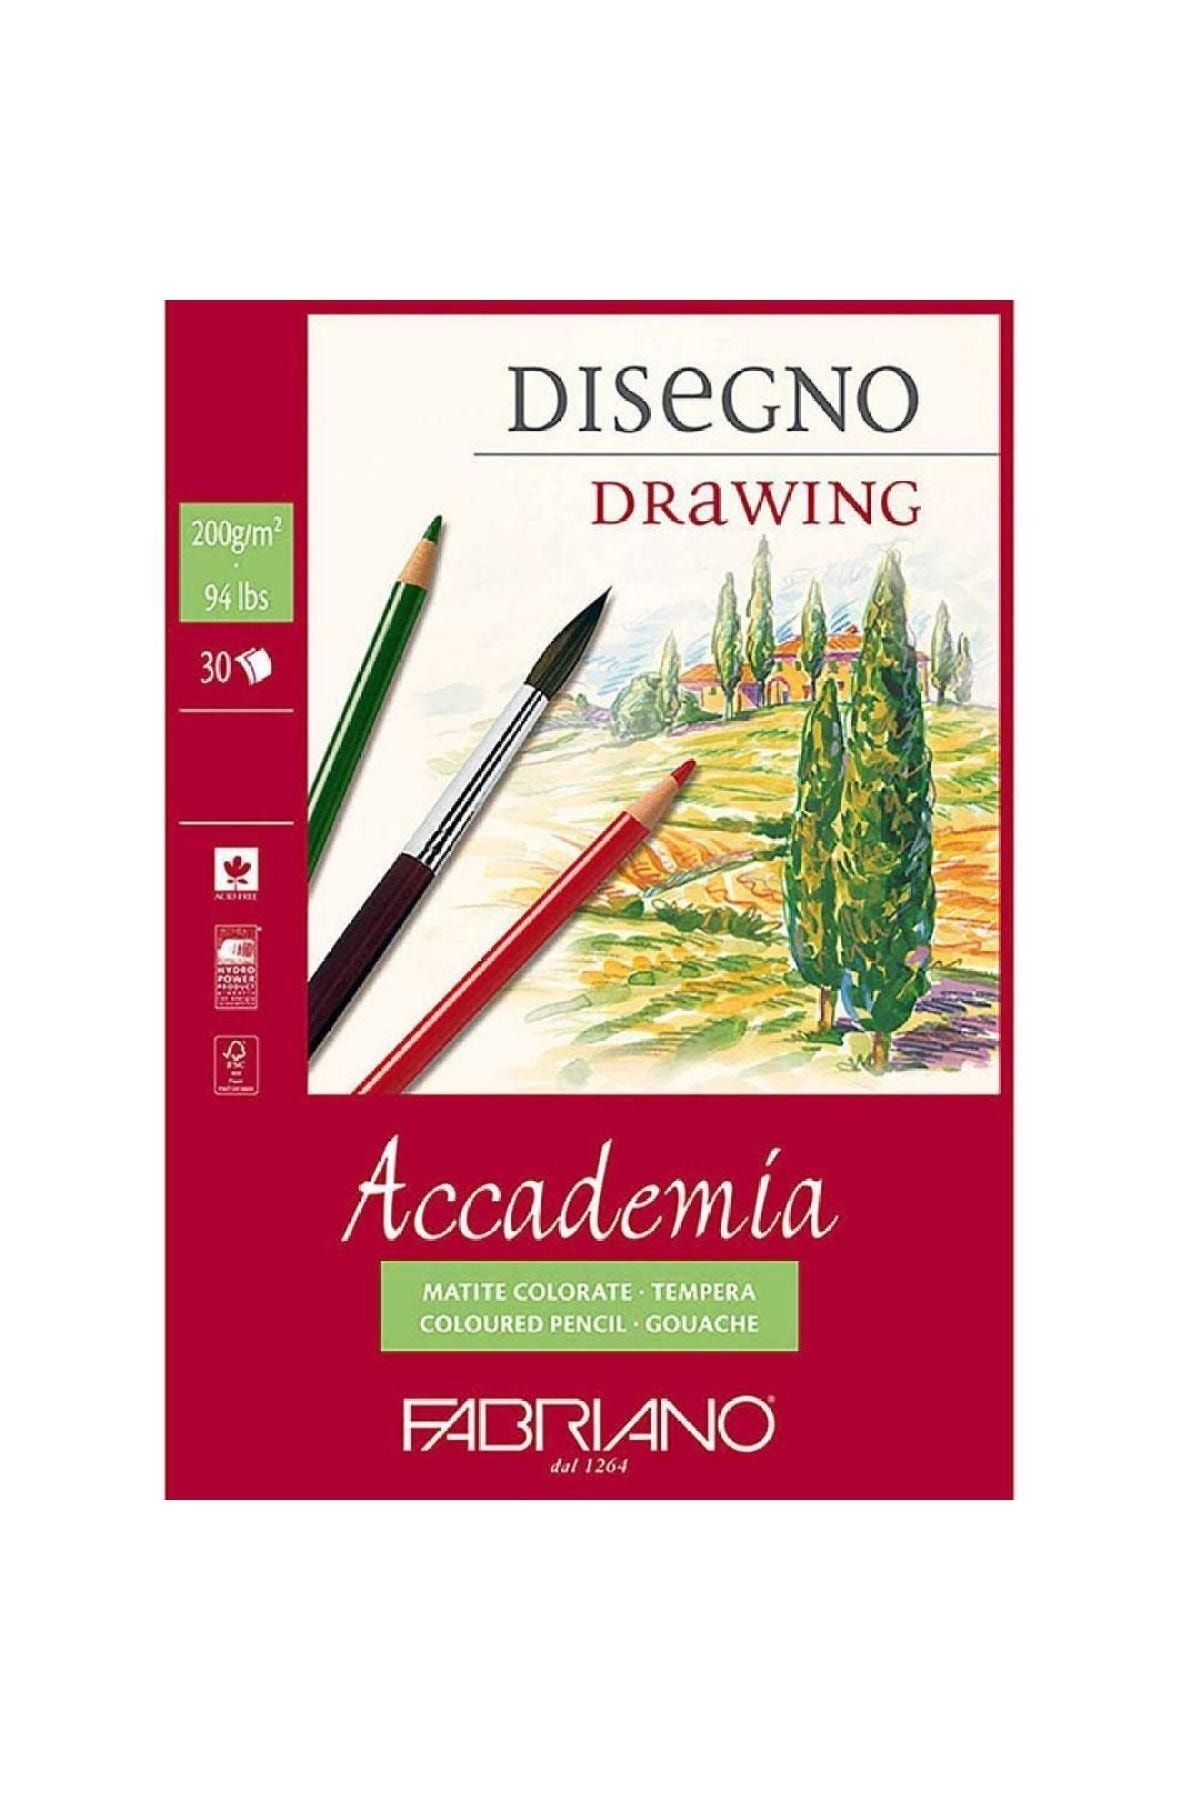 Fabriano Accademia Disegno 200gr Çizim Blok 30 Sayfa A2 (42x59,4cm)